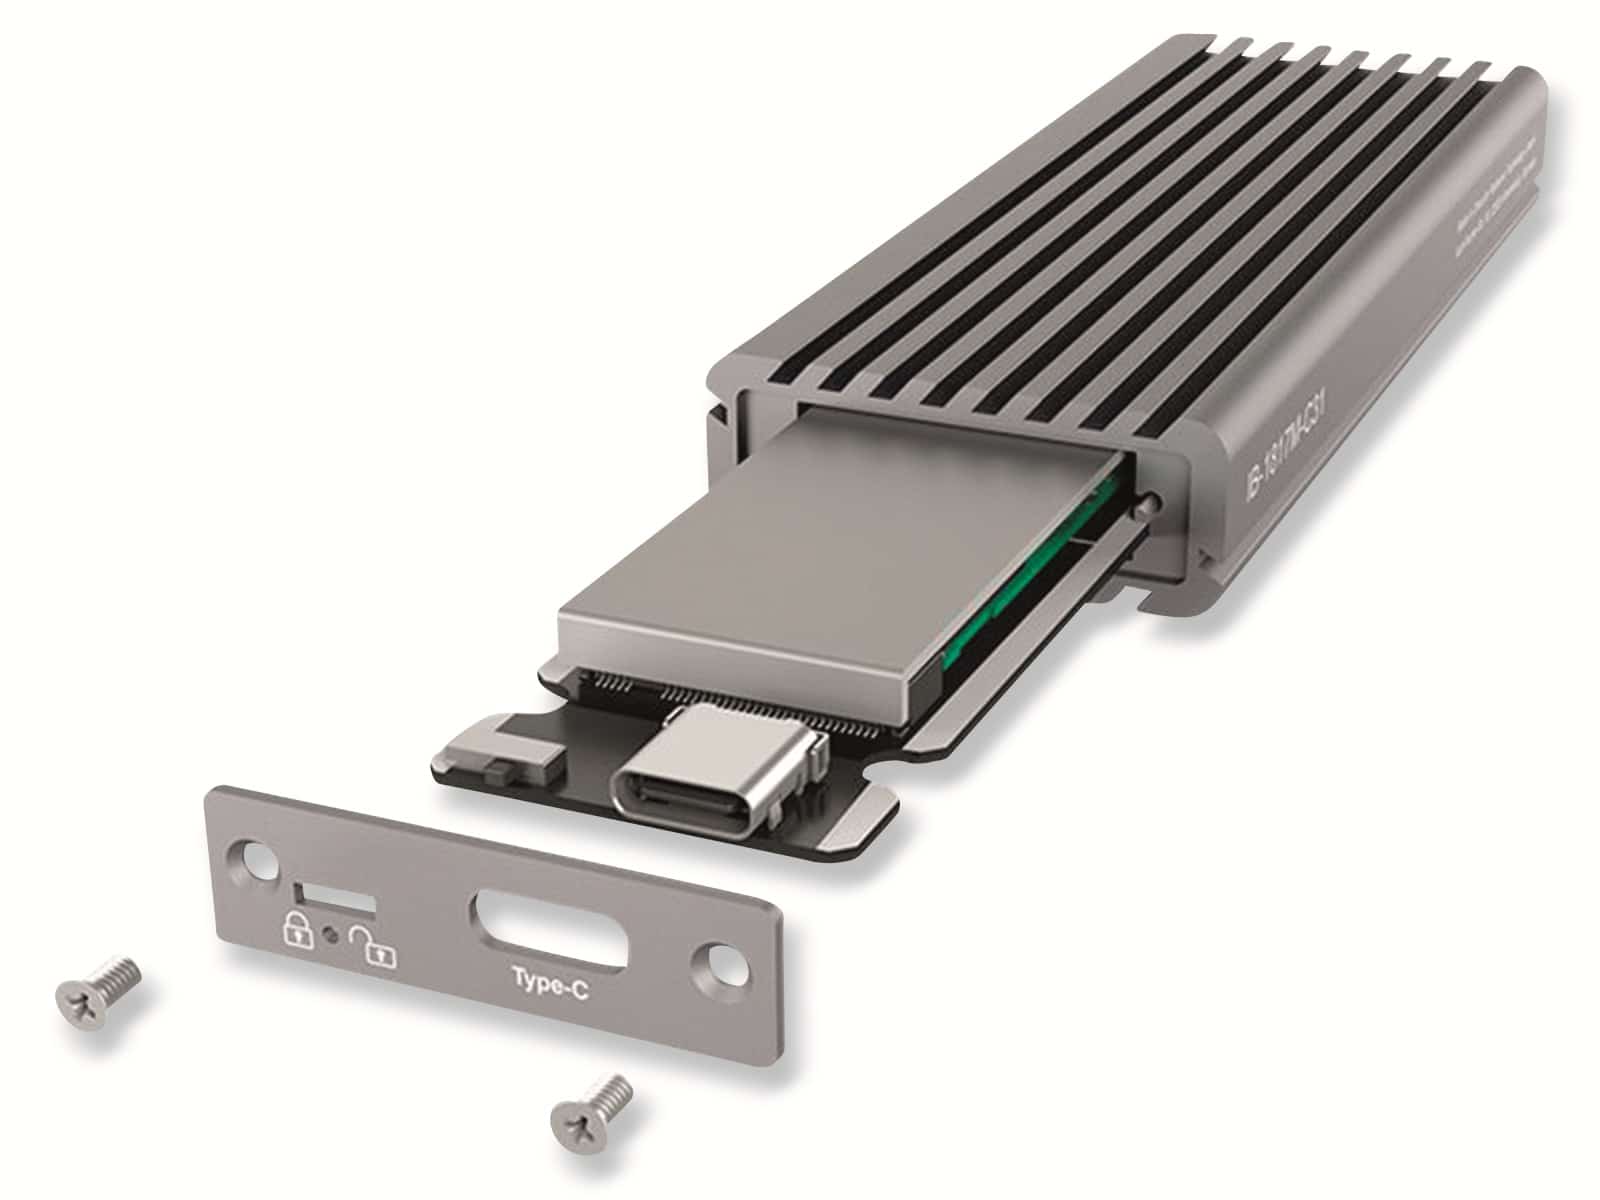 ICY BOX Festplattengehäuse IB-1817M-C31, M.2 PCIe SSD, USB 3.1